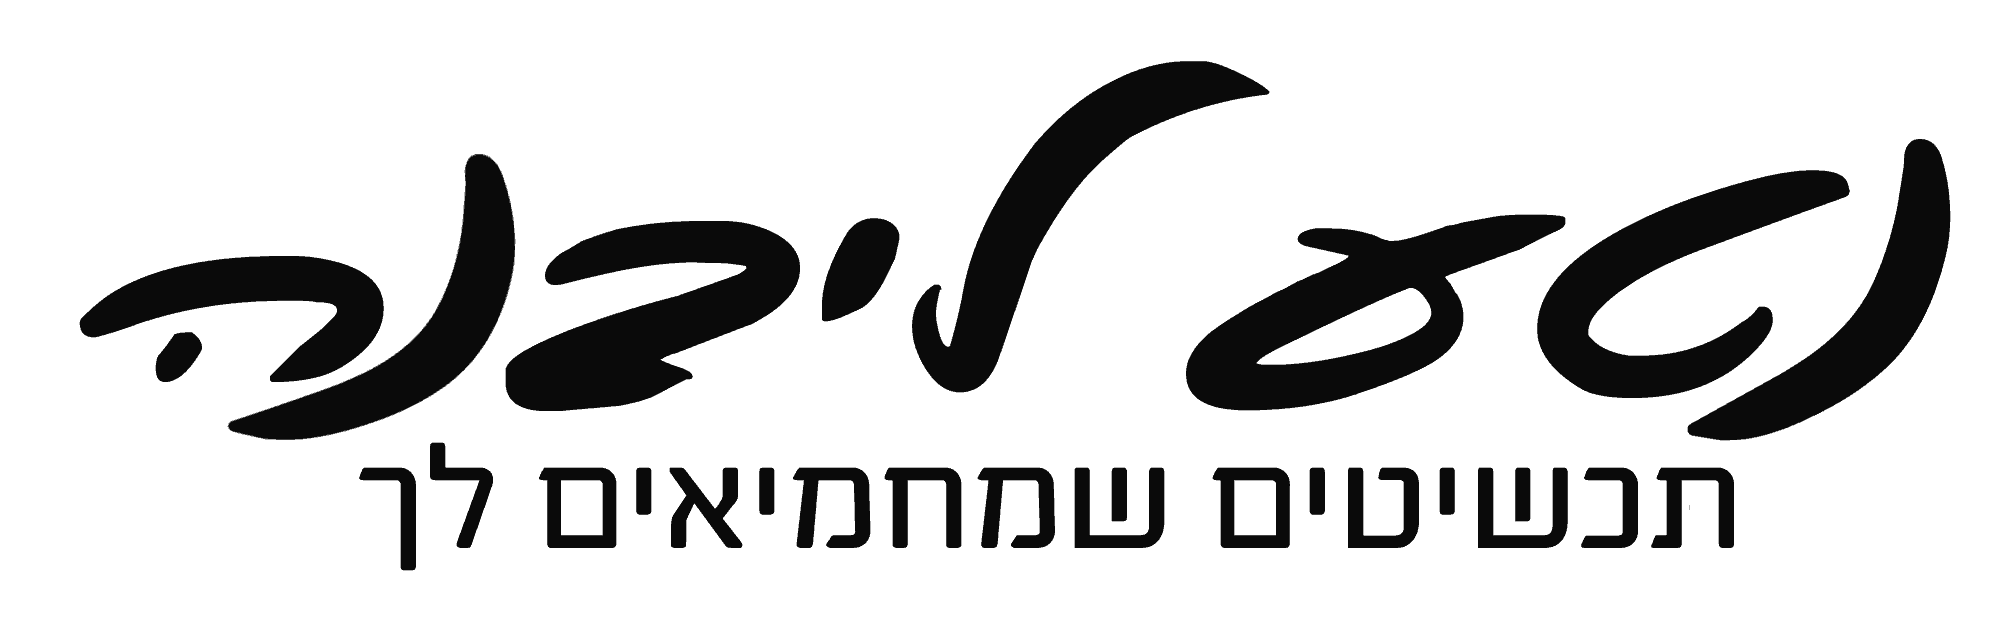 neta-logo-heb-2019-1.png